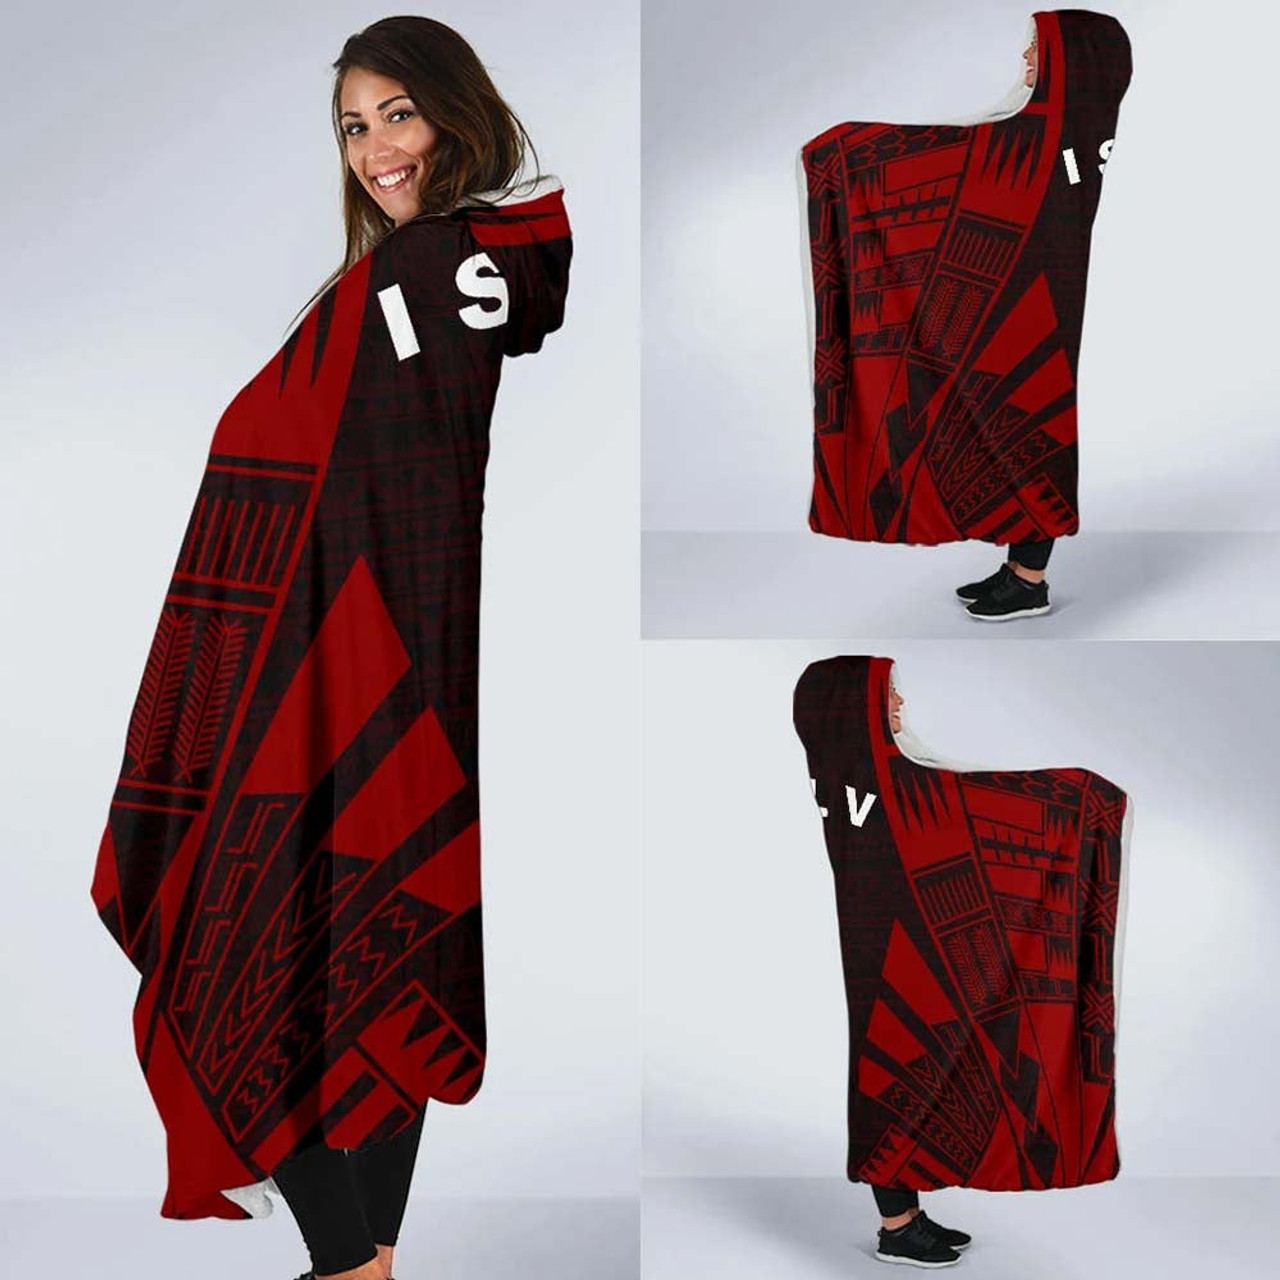 Society Islands Hooded Blanket - Polynesian Tattoo Red 2